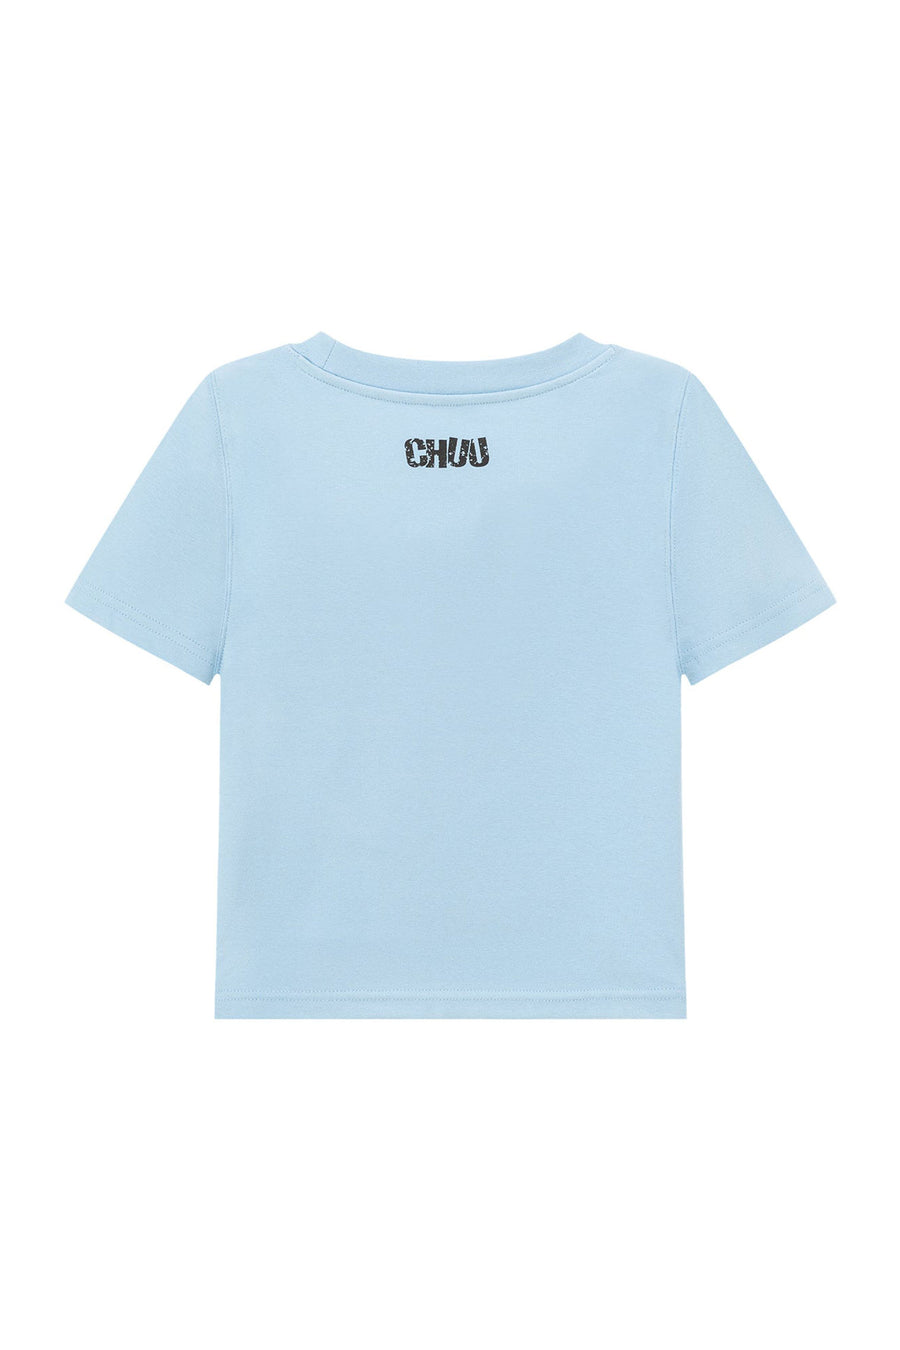 CHUU Basic Star Cut Out Short Sleeve Cropped T-Shirt